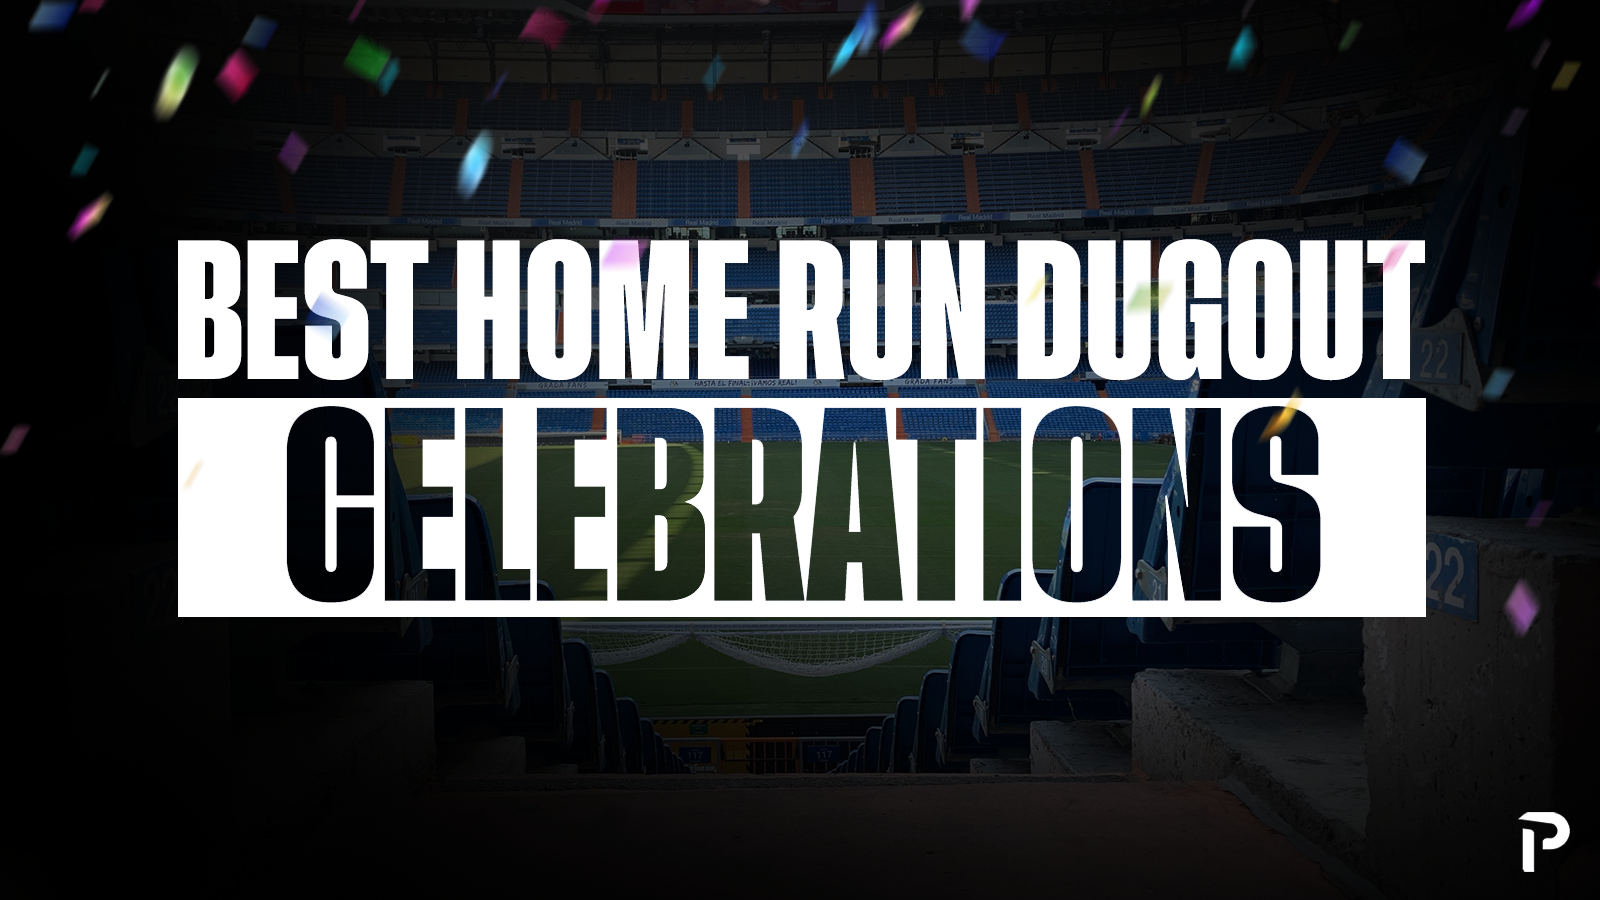 MLB's best home run celebrations, ranked - The Washington Post